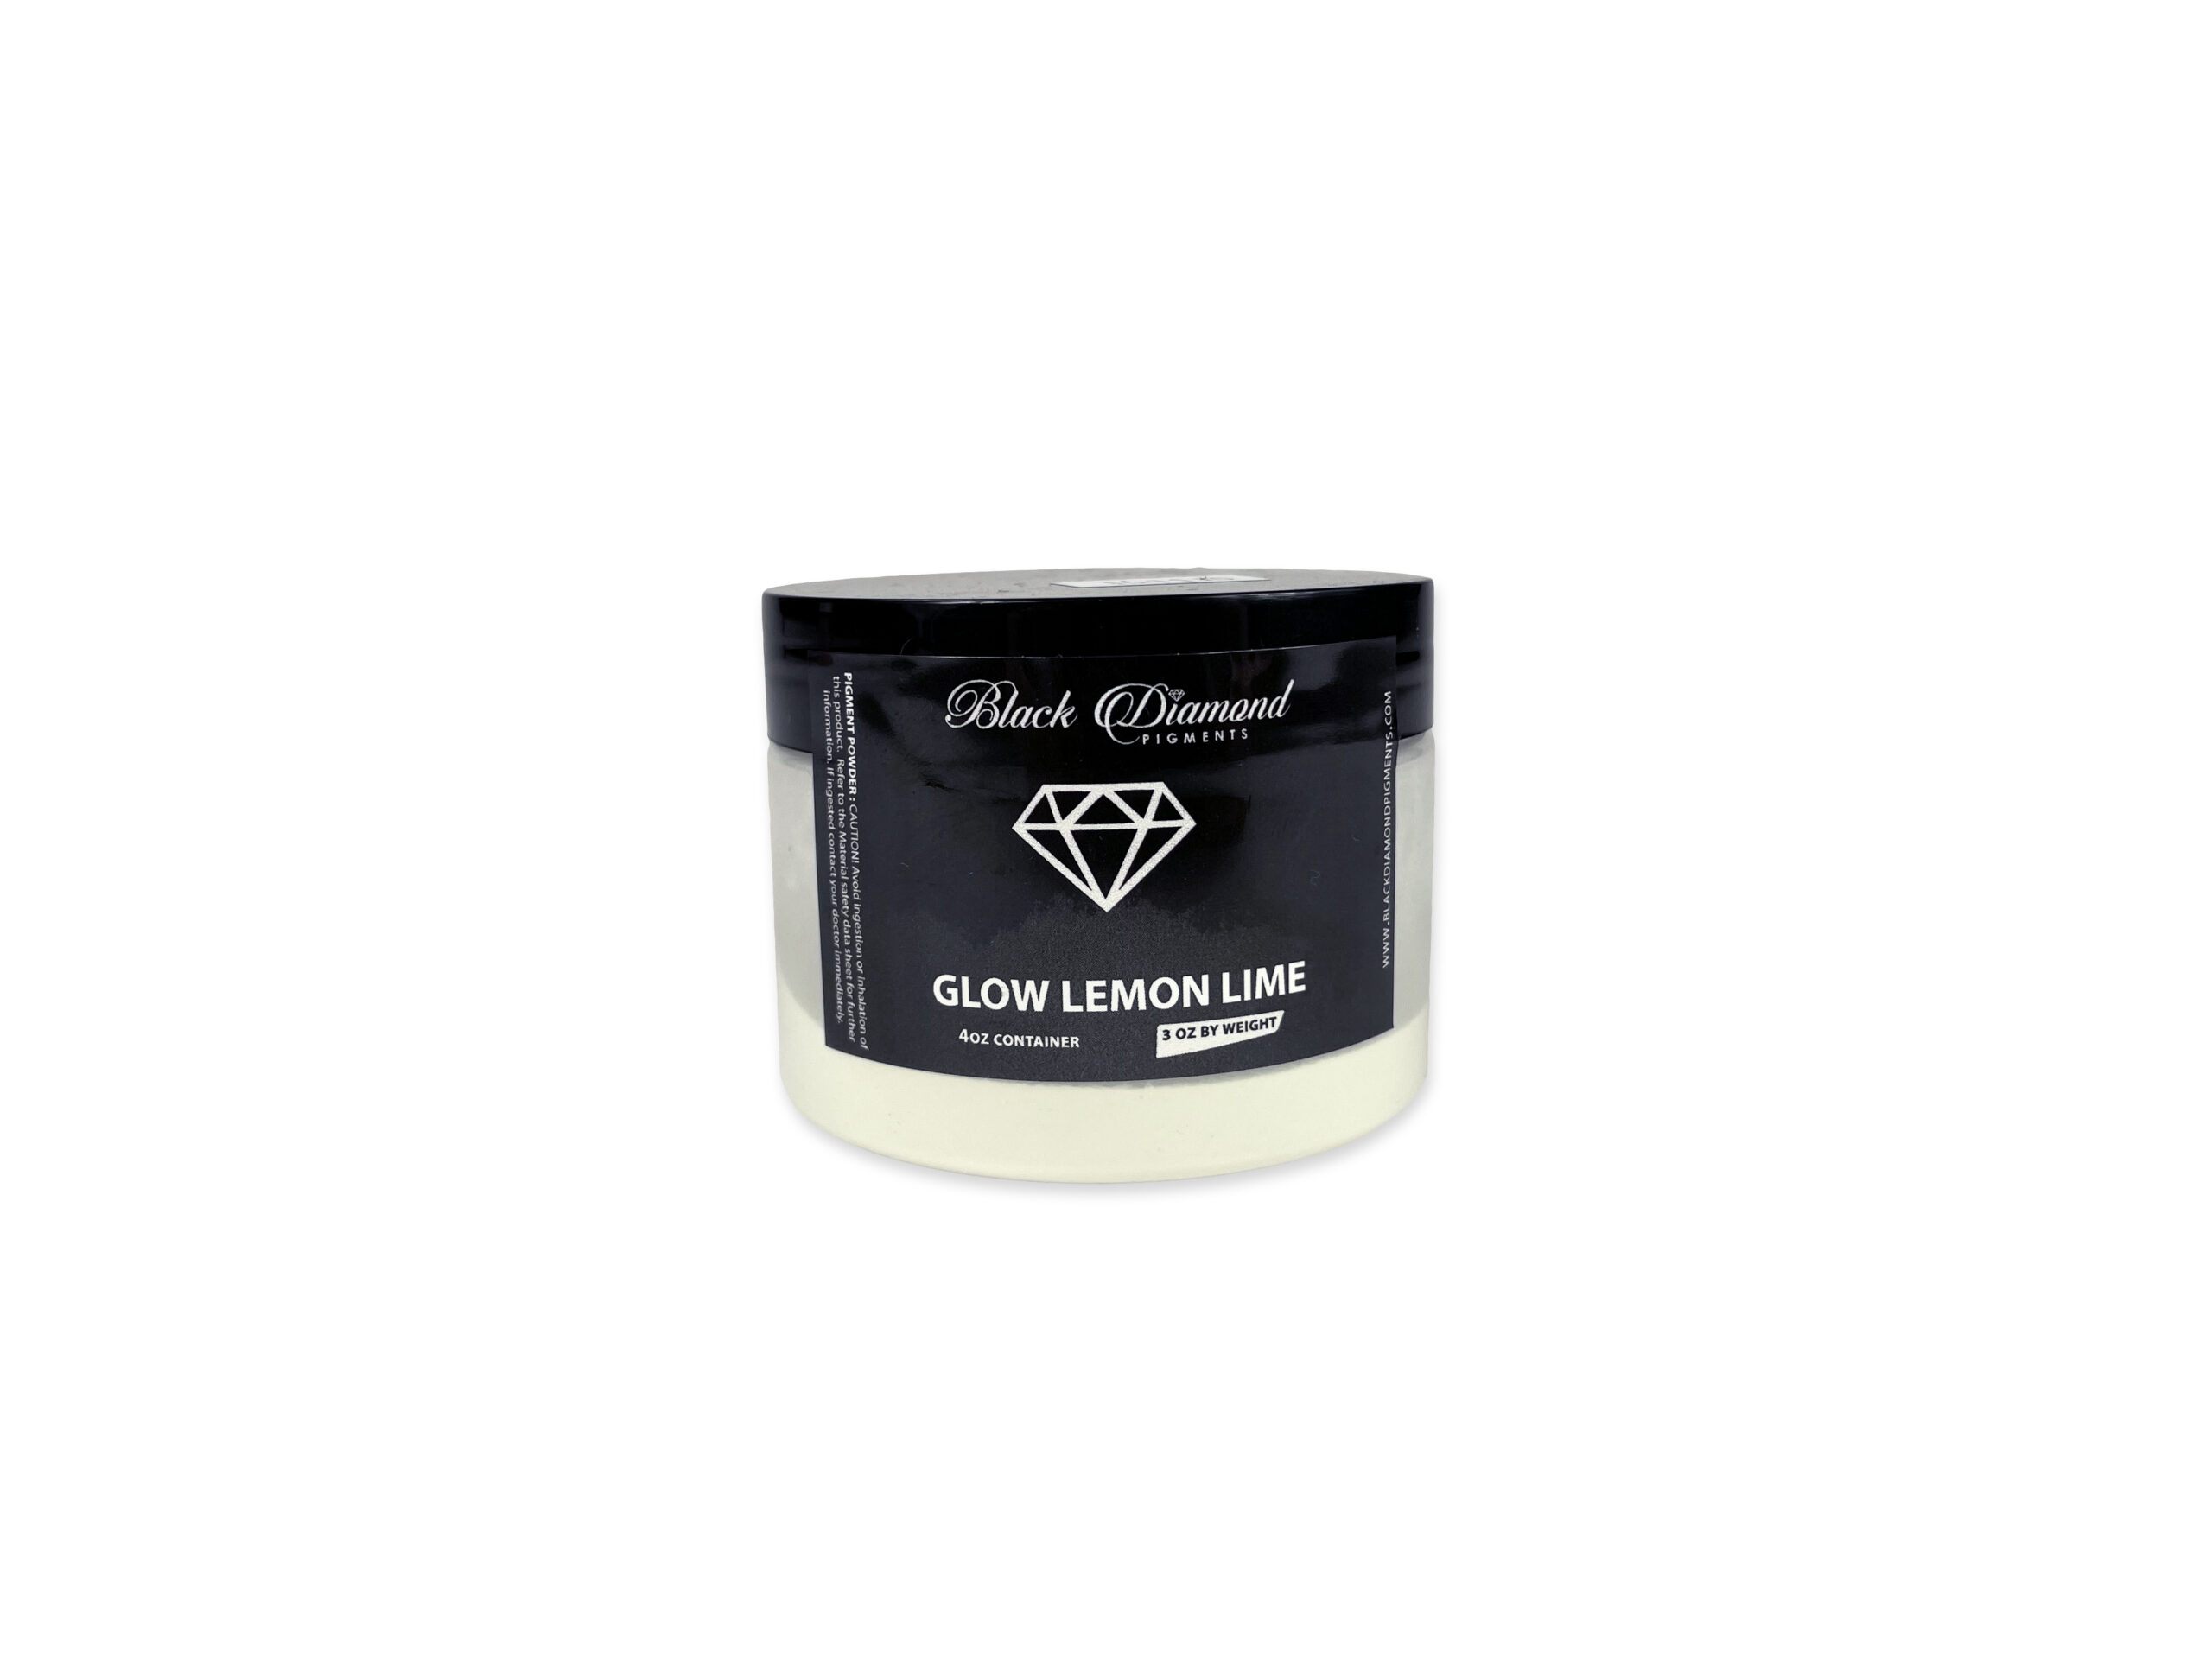 Black Diamond Mica Powder Pigment for epoxy resin in Glow Lemon Lime. (4oz container)